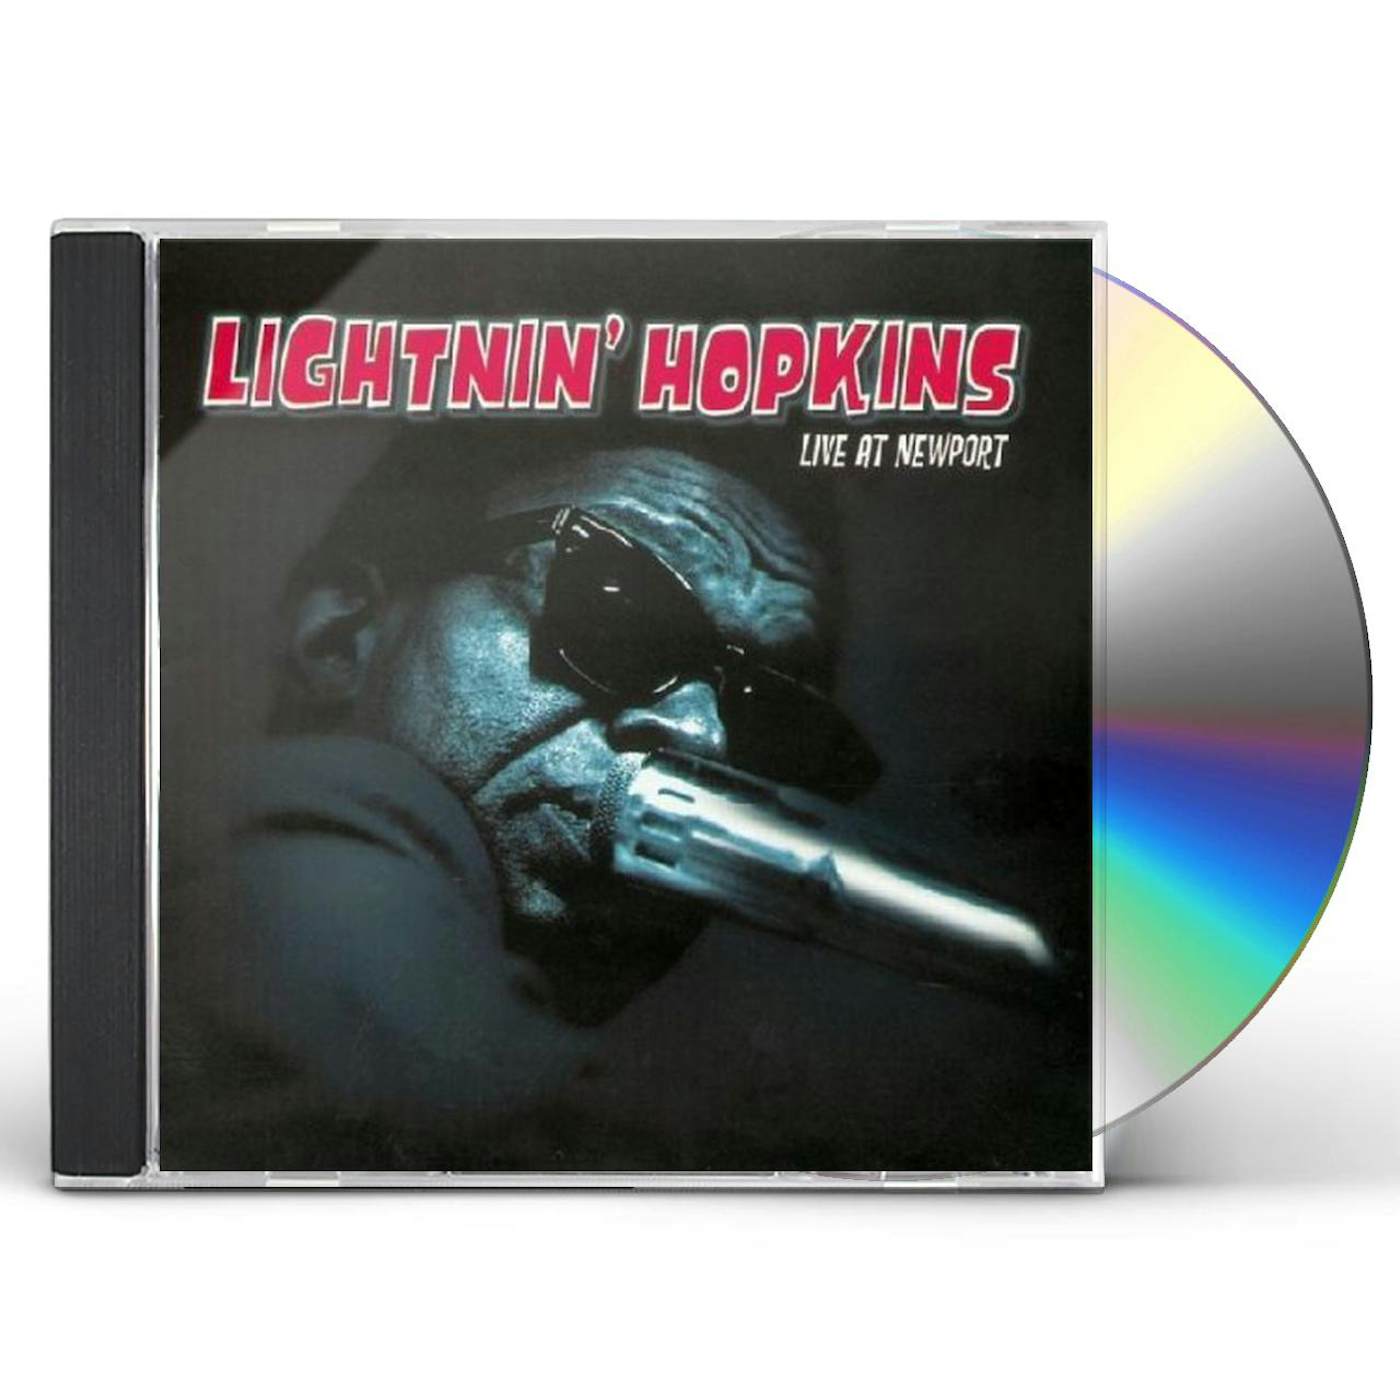 Lightnin' Hopkins LIVE AT NEWPORT CD